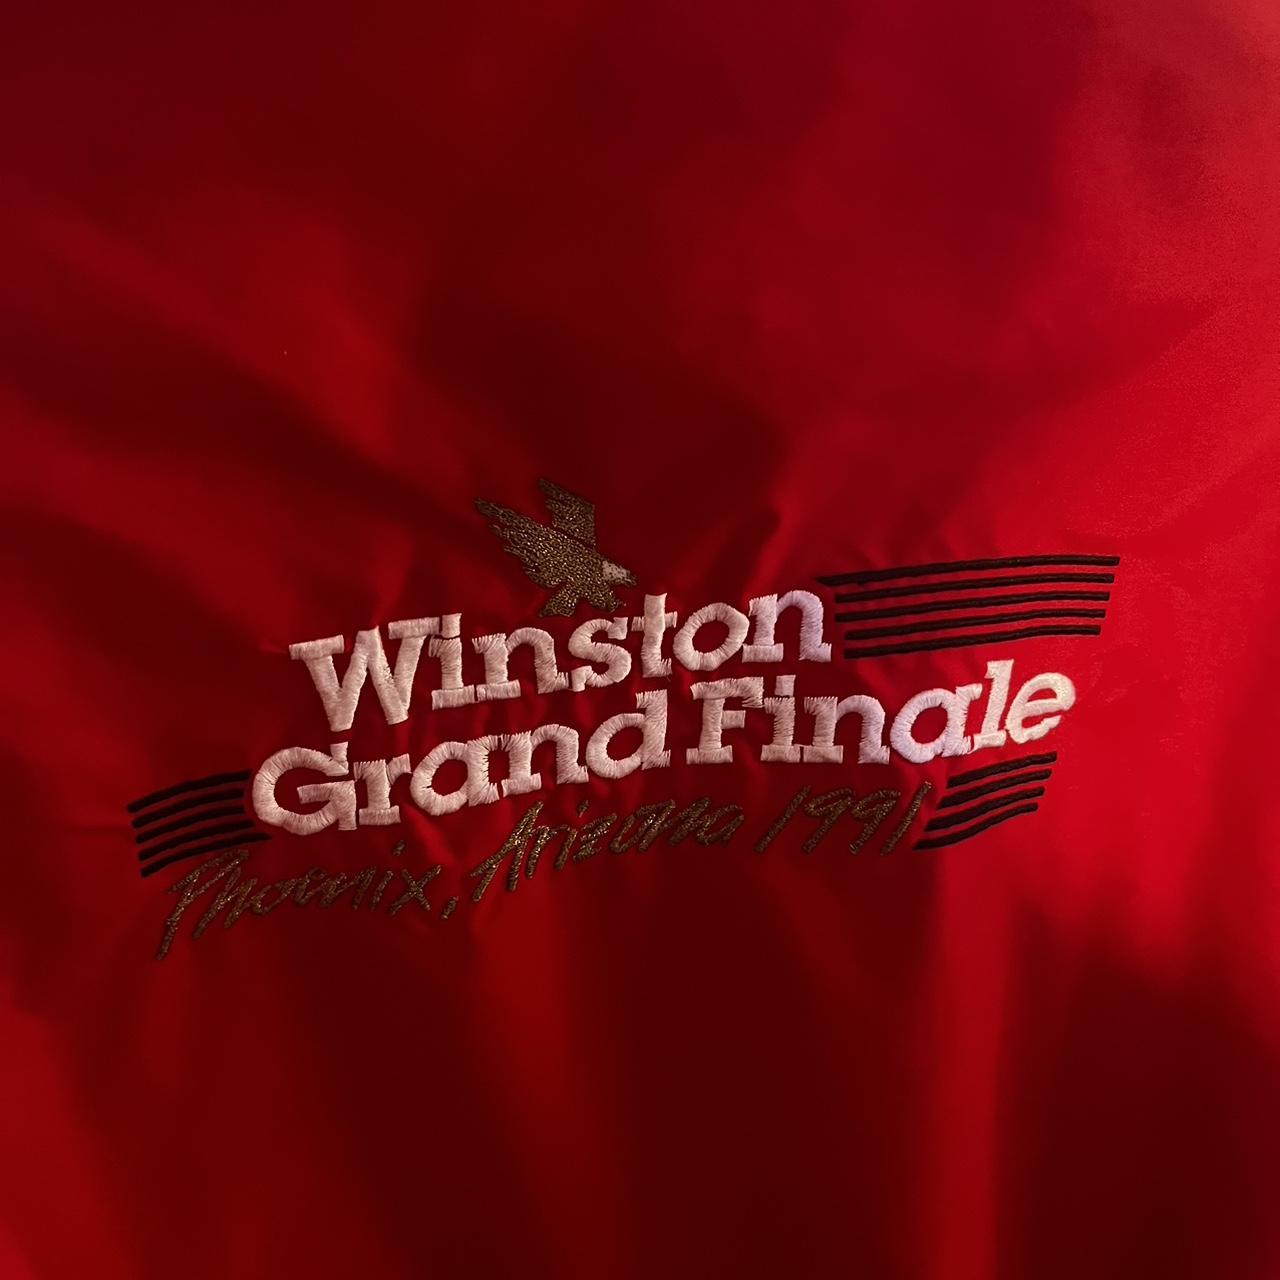 1991 Winston grand finale jacket Listed xxl Fits... - Depop